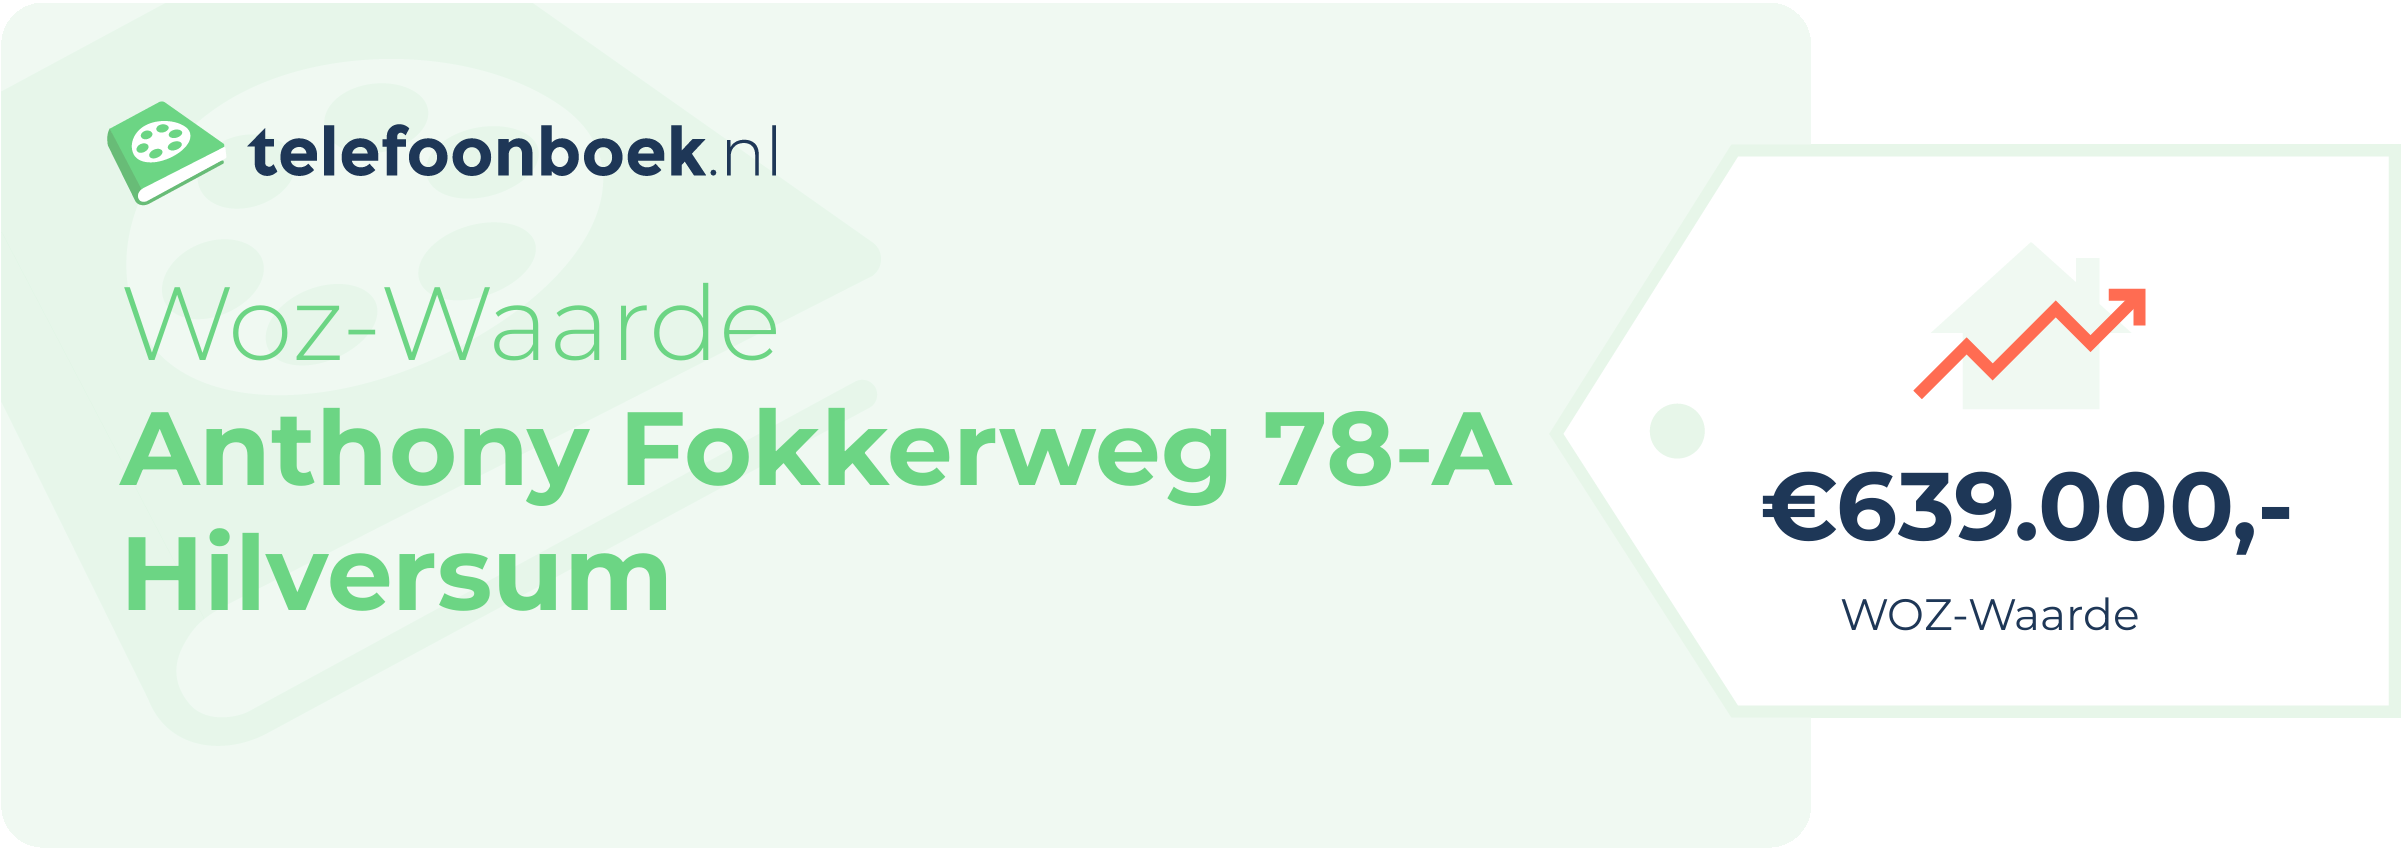 WOZ-waarde Anthony Fokkerweg 78-A Hilversum